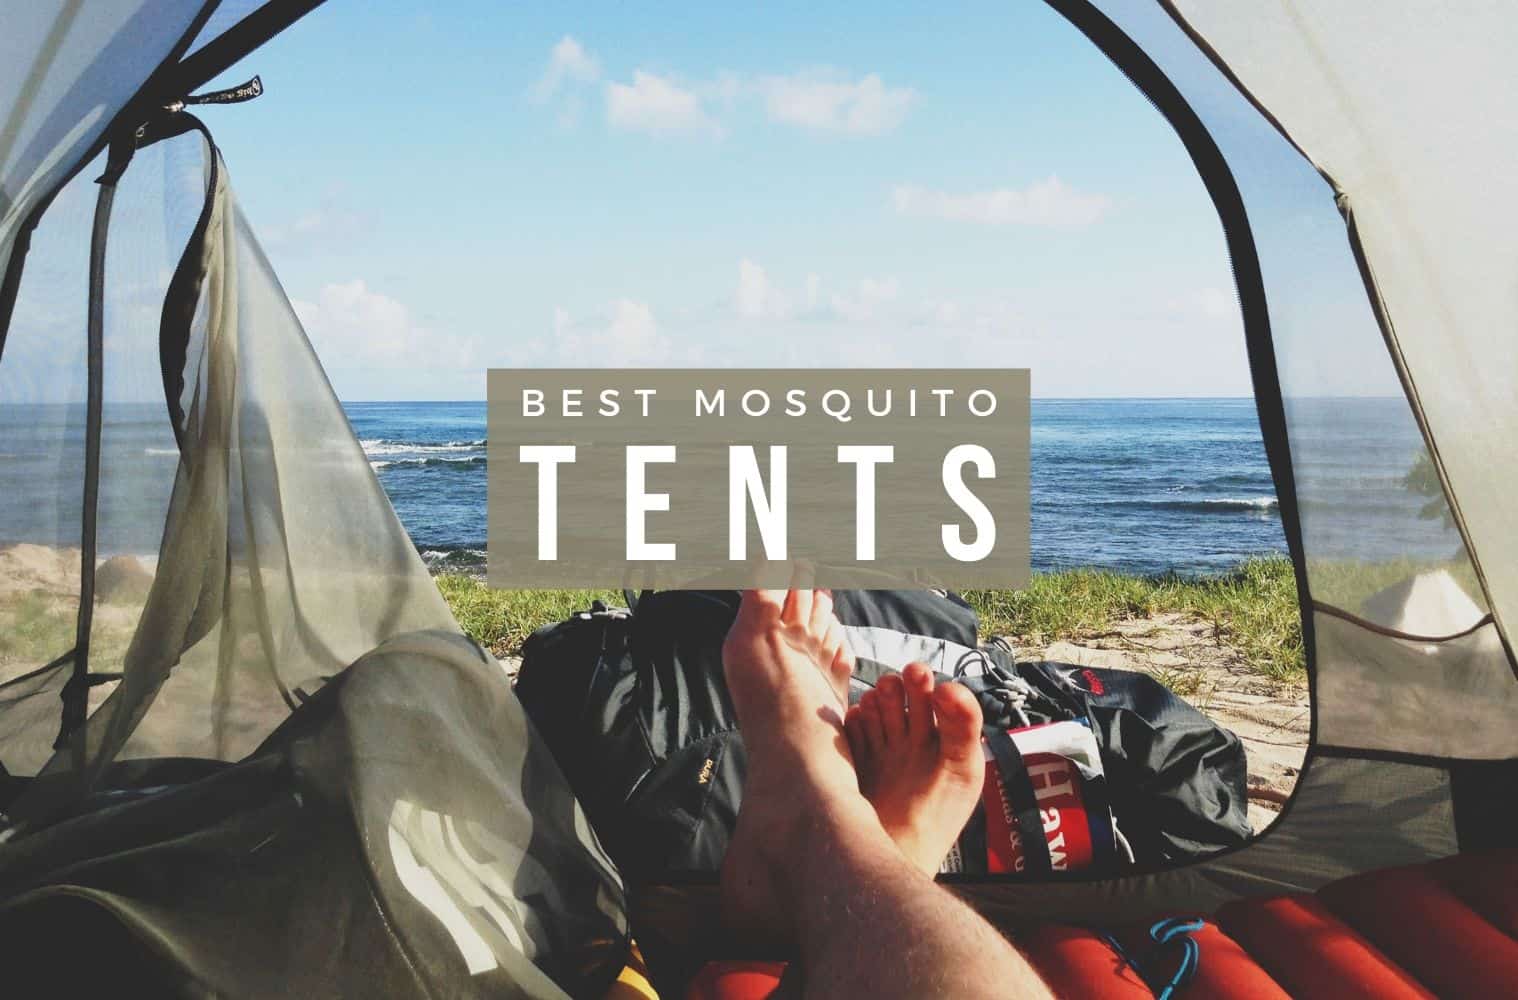 Mosquito Tents